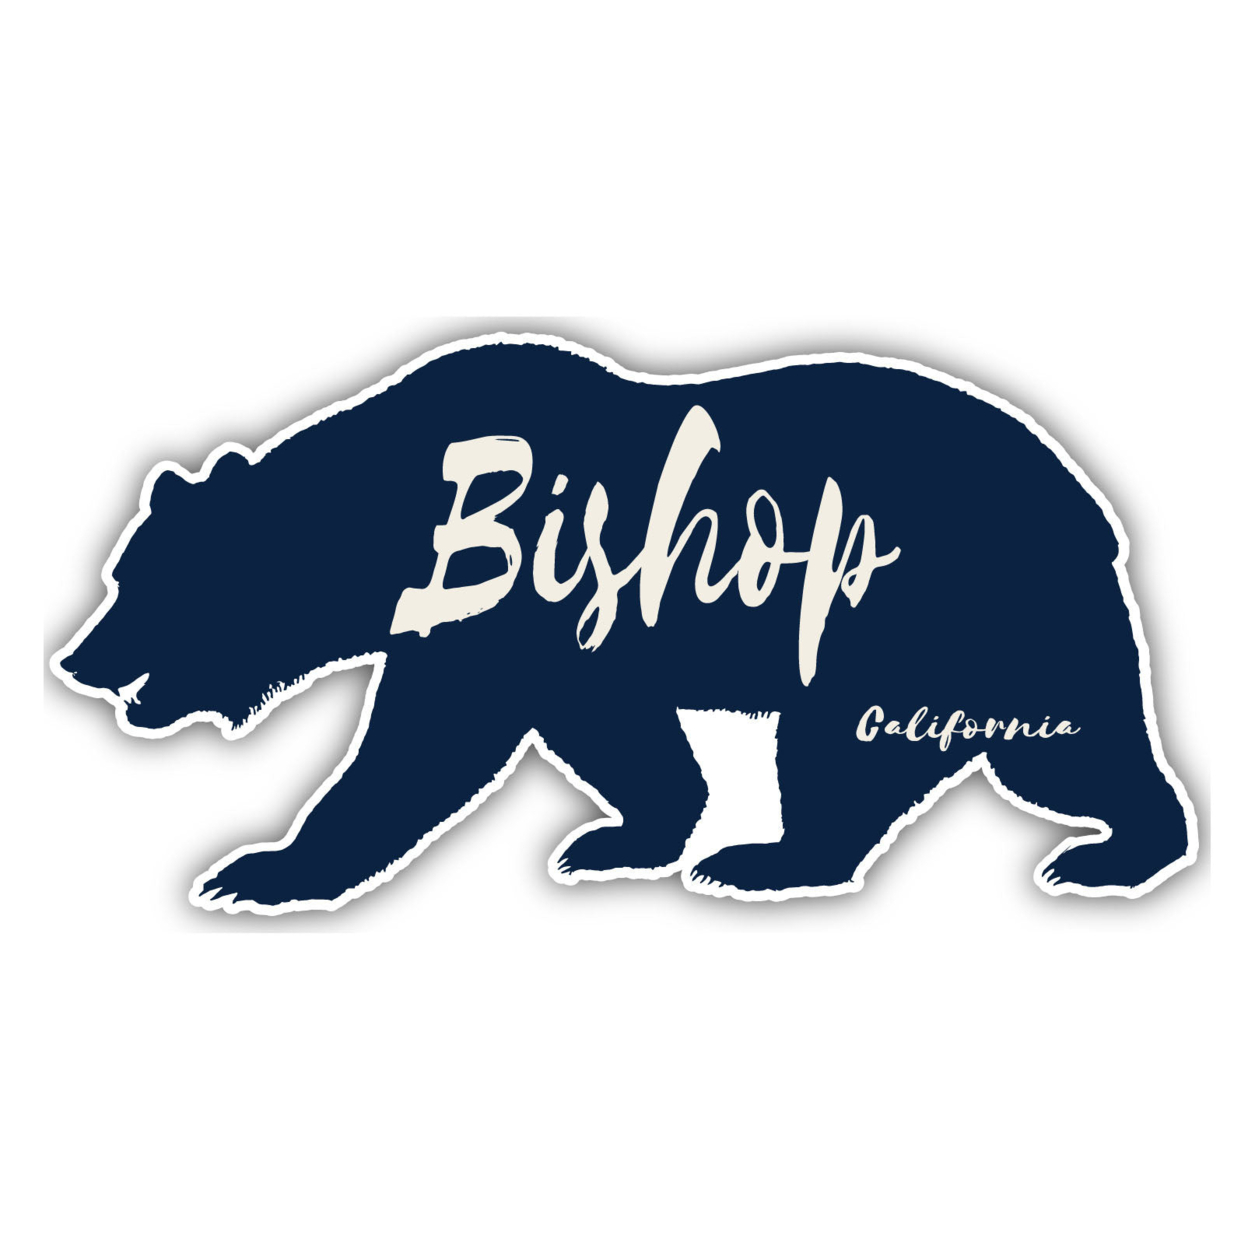 Bishop California Souvenir Decorative Stickers (Choose Theme And Size) - Single Unit, 8-Inch, Bear